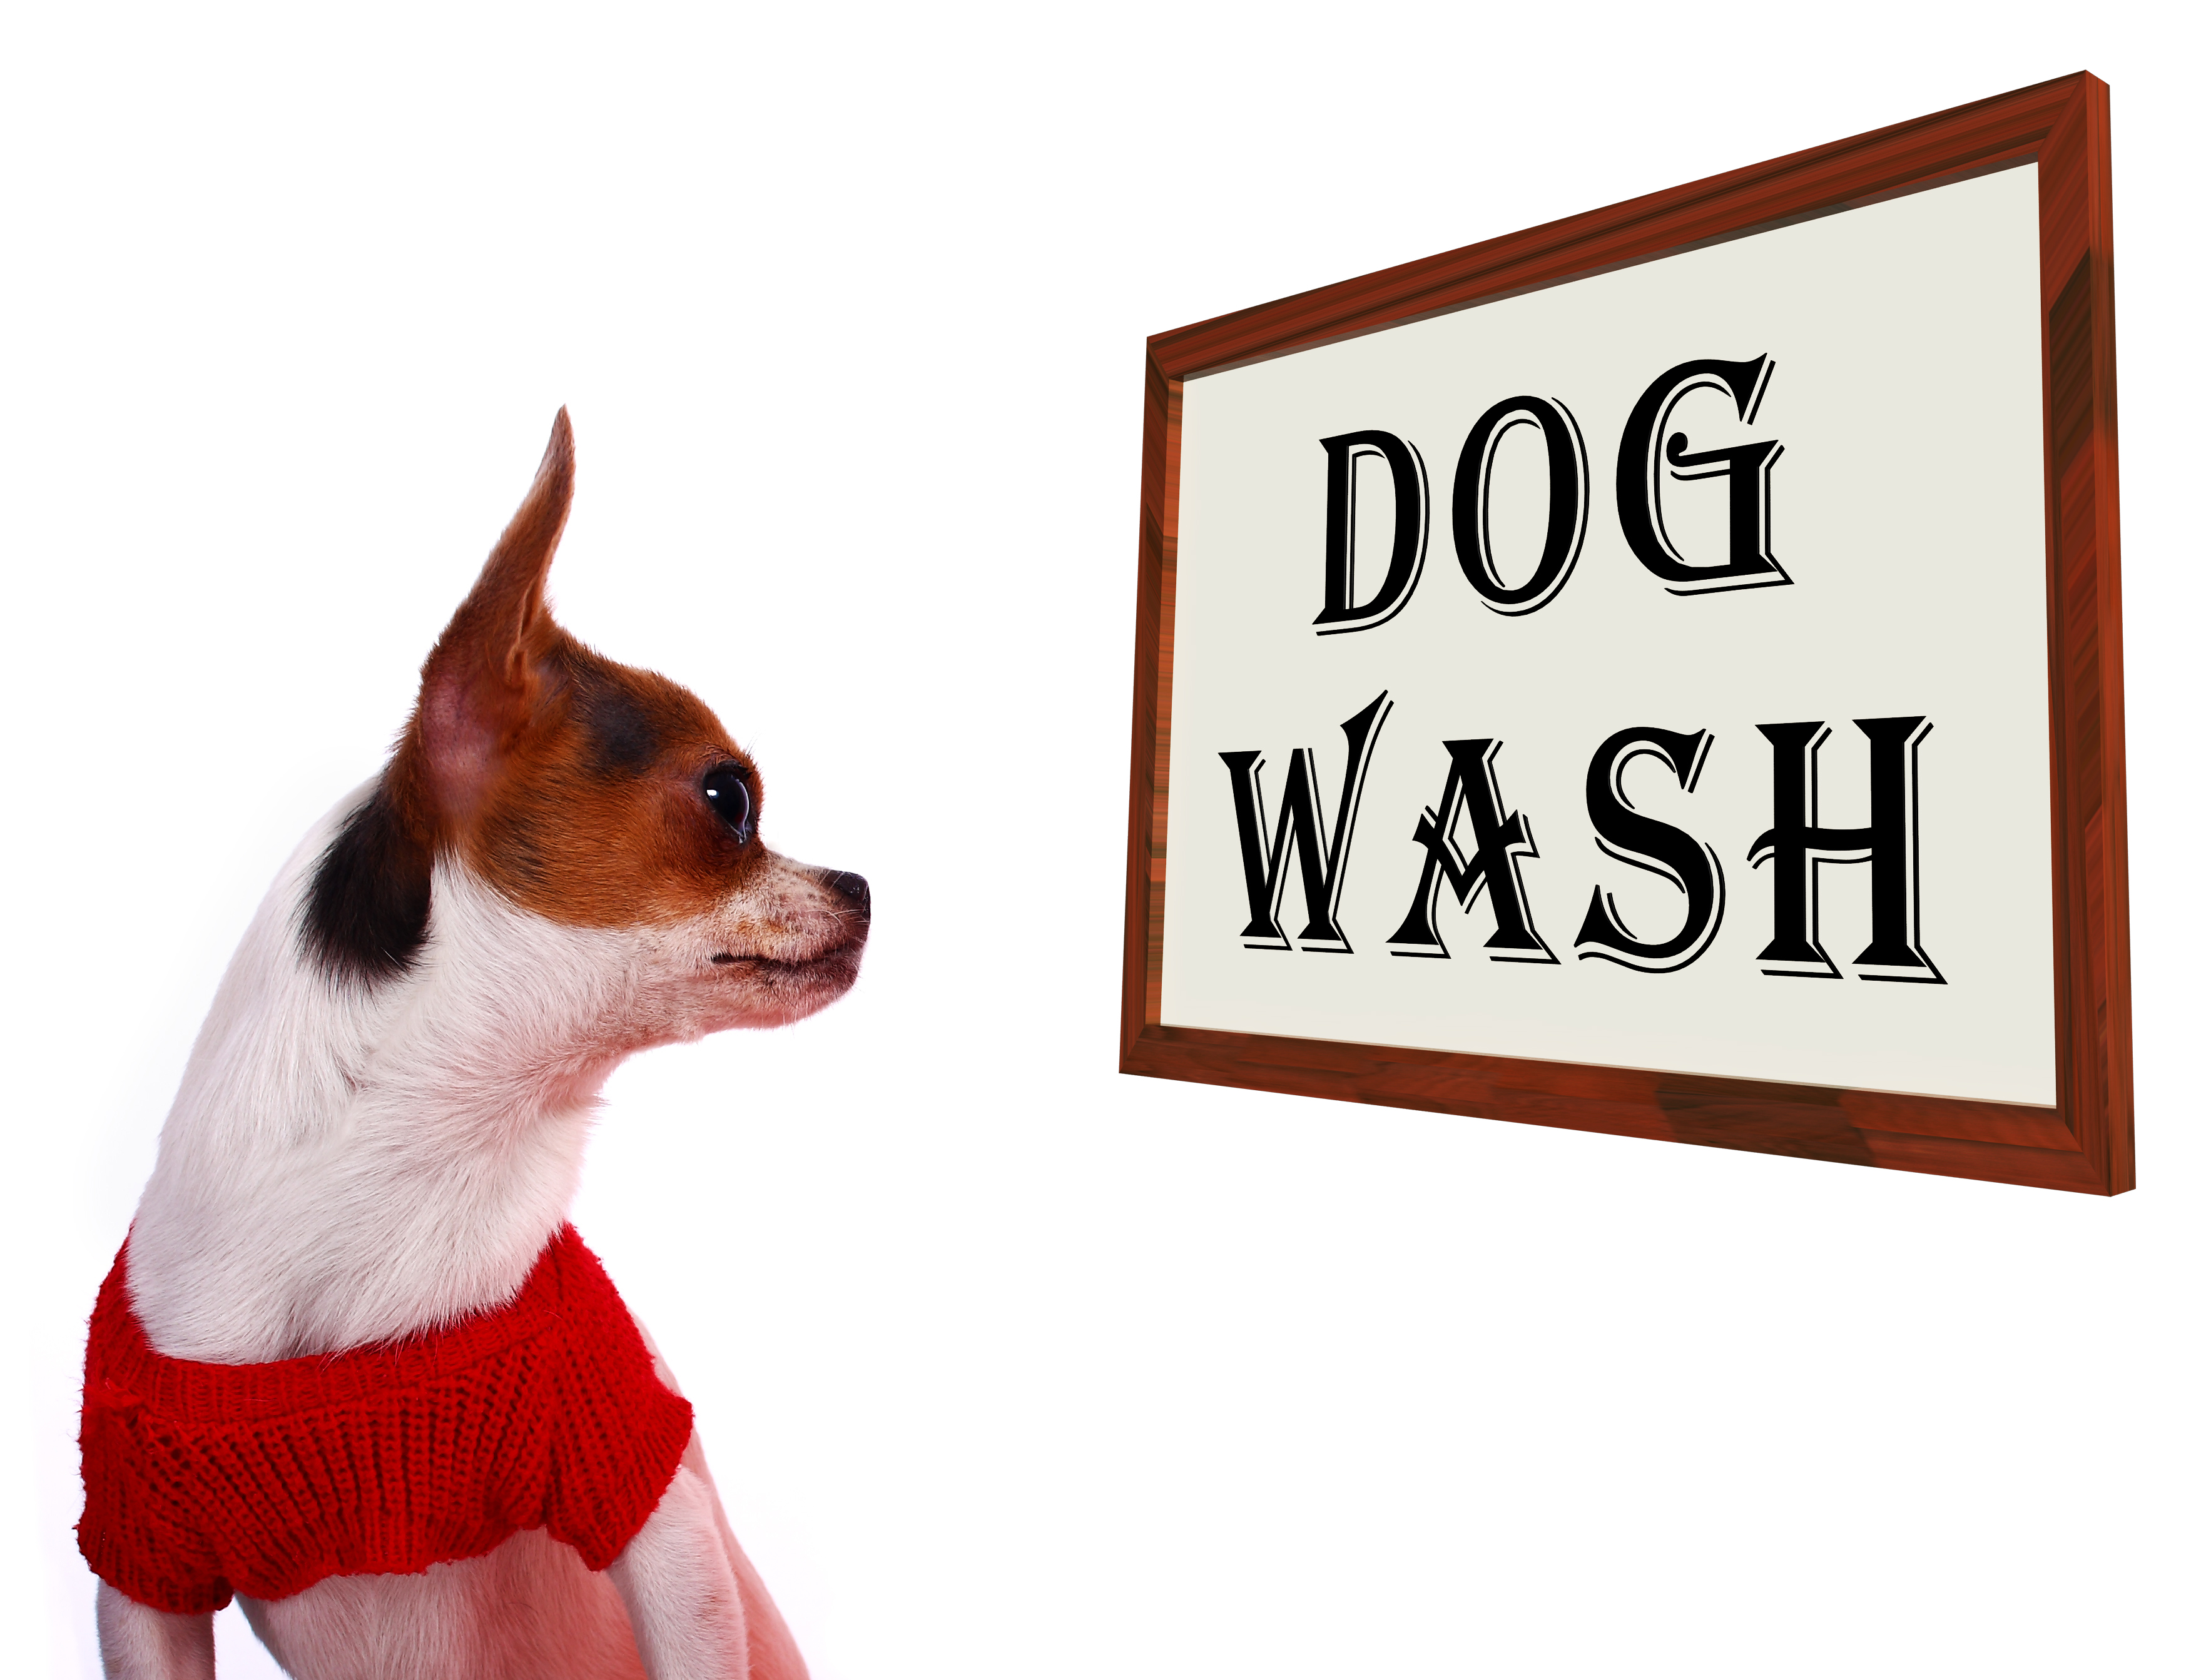 Dog Wash Sign Showing Canine Grooming Washing Or Shampoo